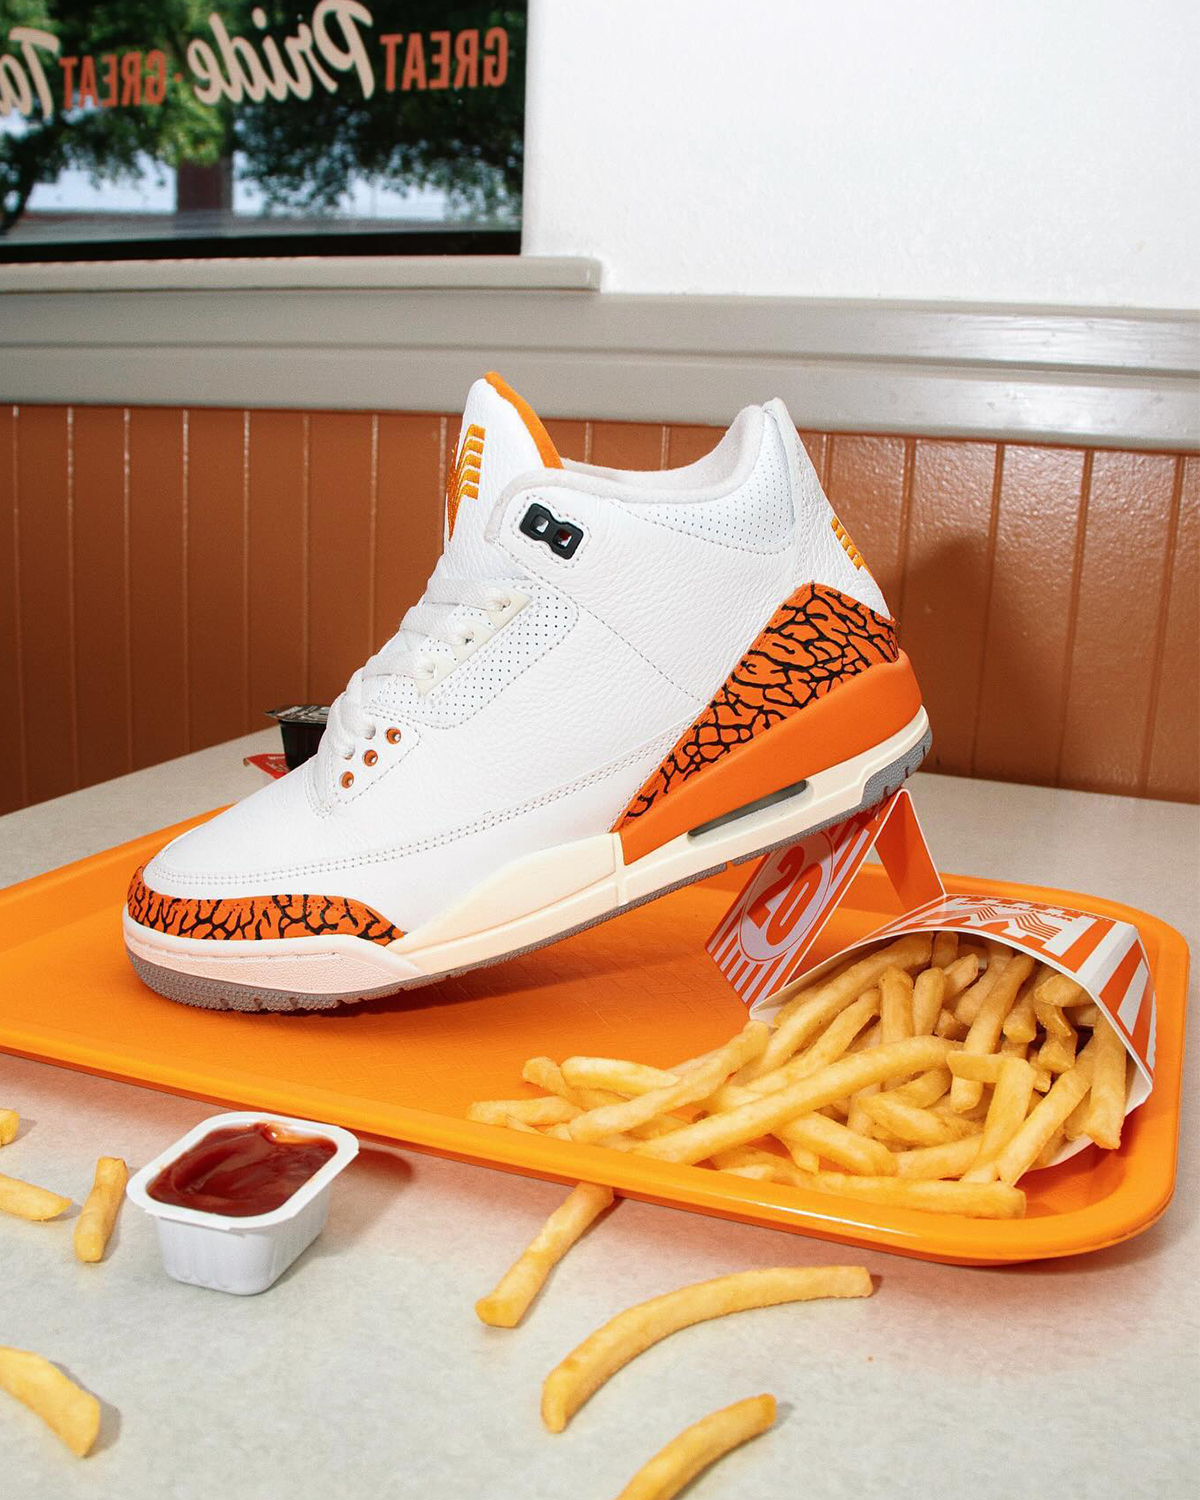 Air Jordan Nike AJ Future Volt Whataburger Customs 2